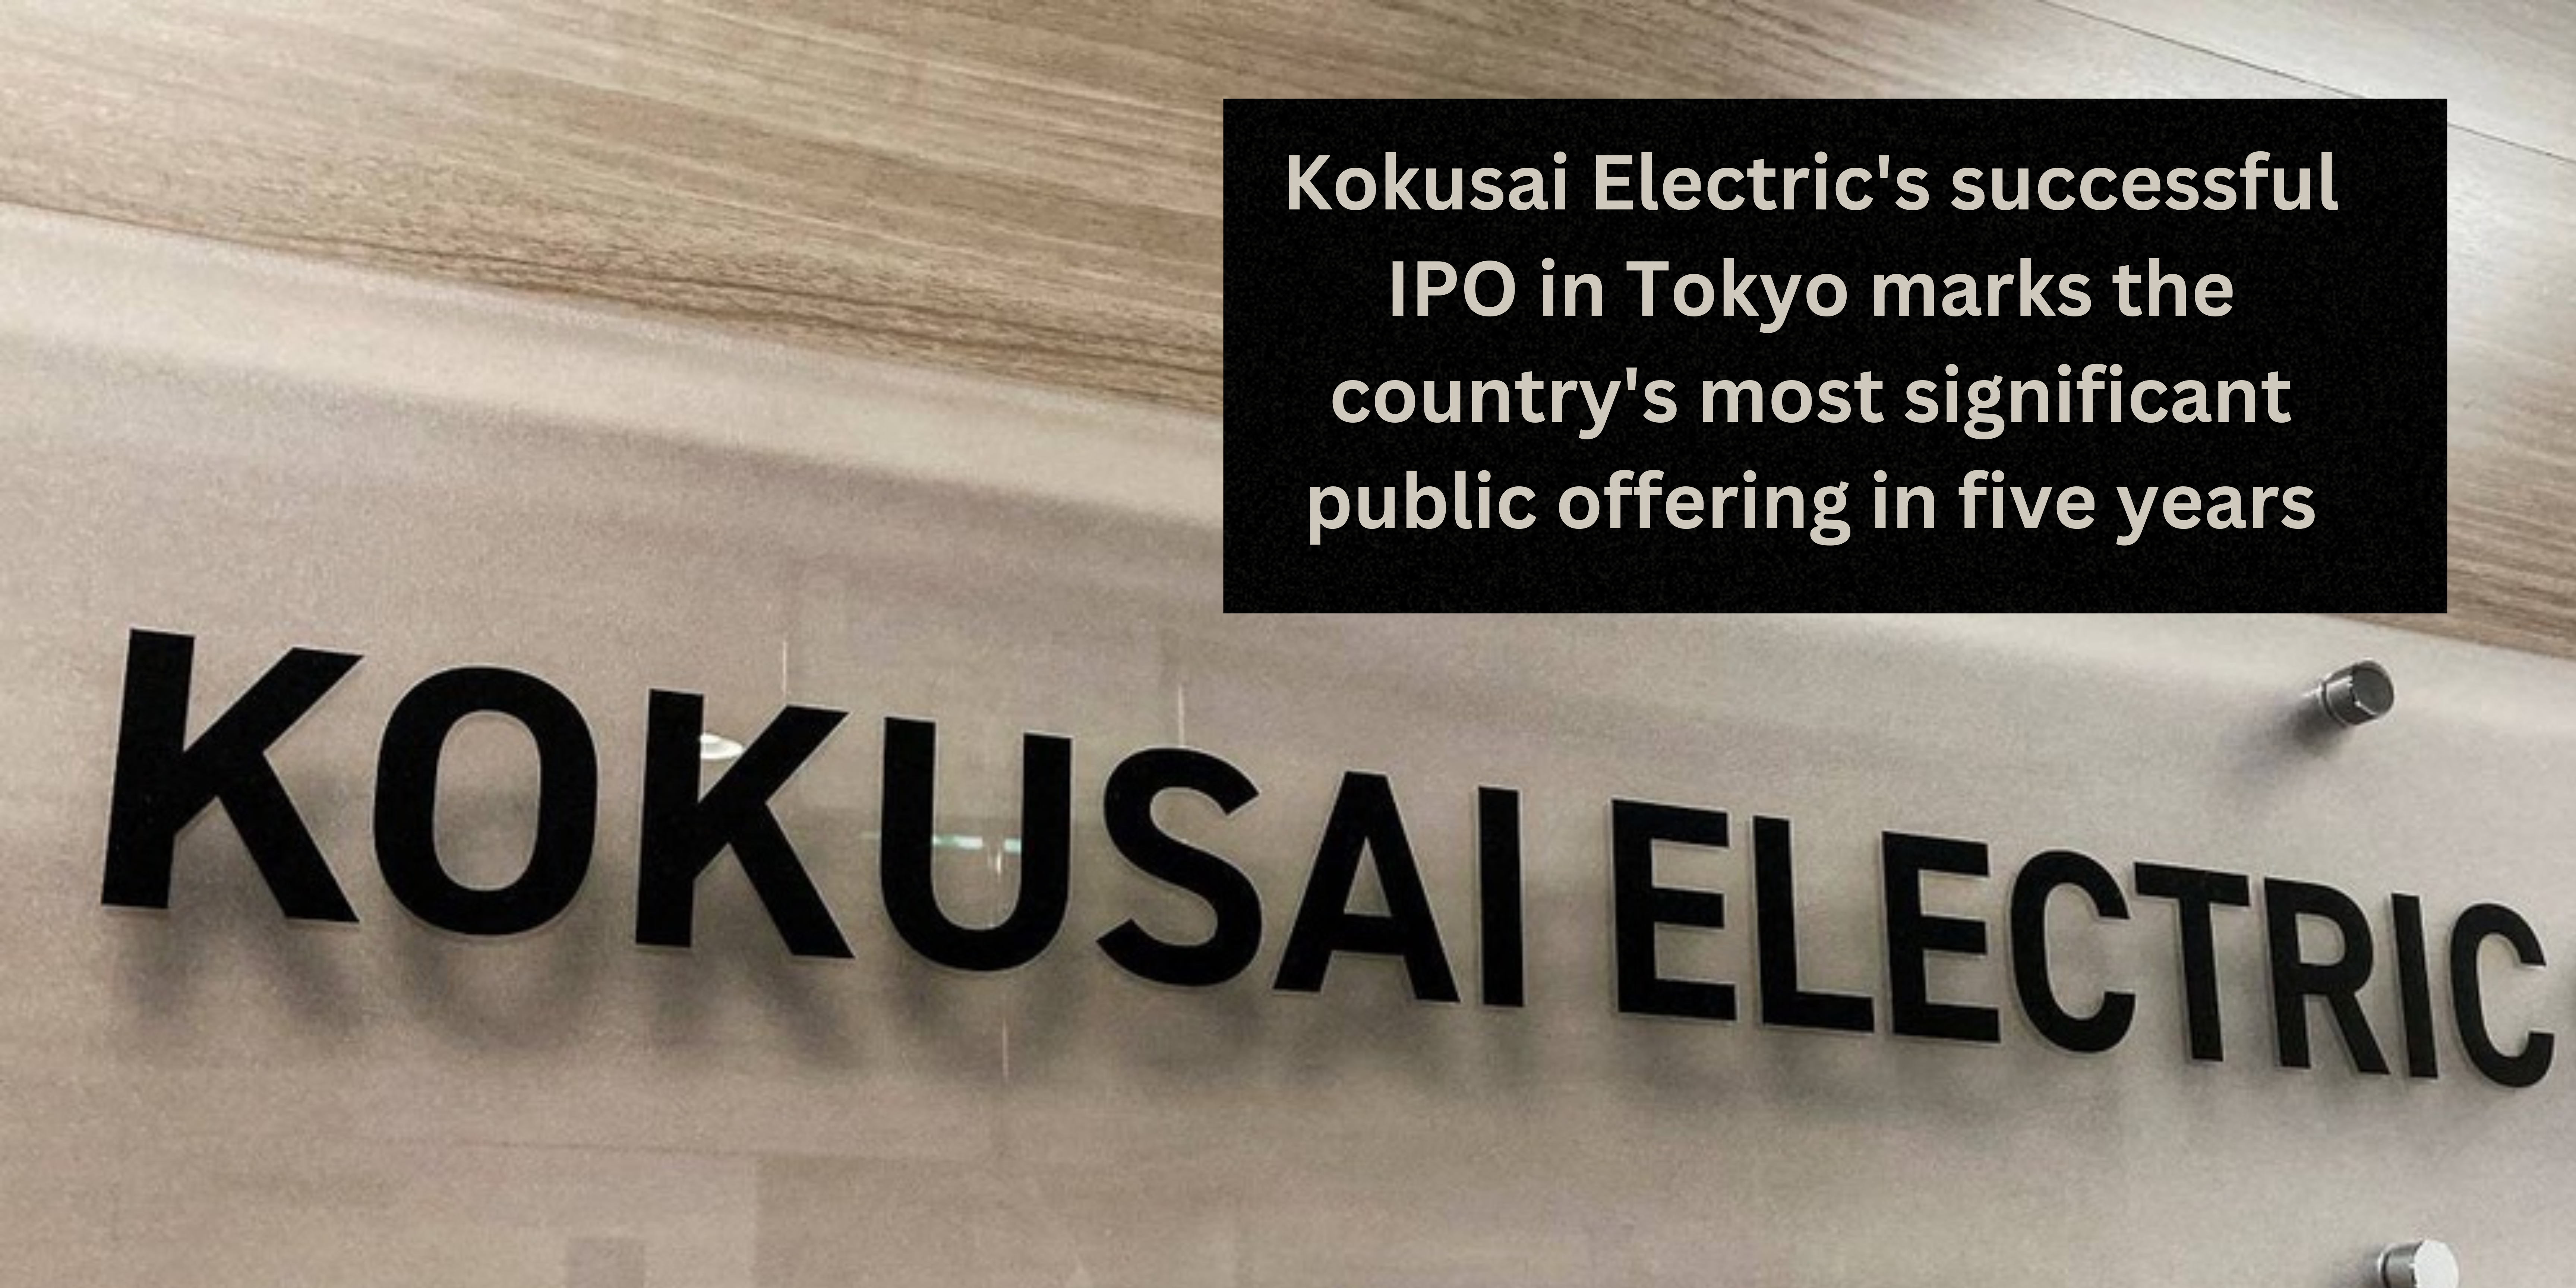 Kokusai Electric's successful IPO in Tokyo